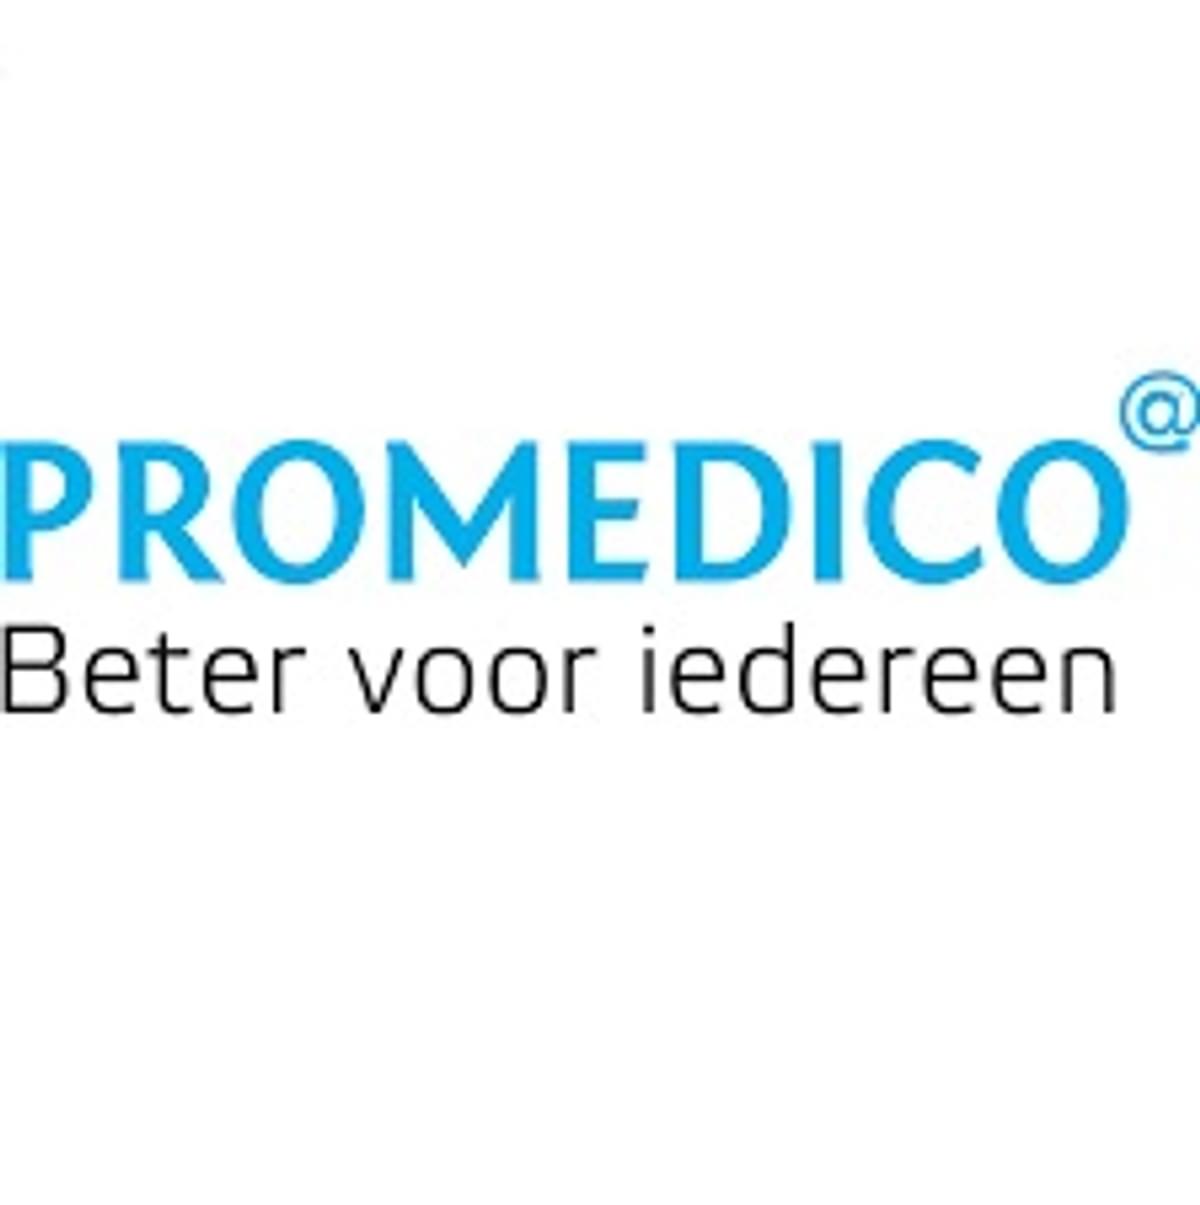 Pita van Arkel verlaat Promedico image